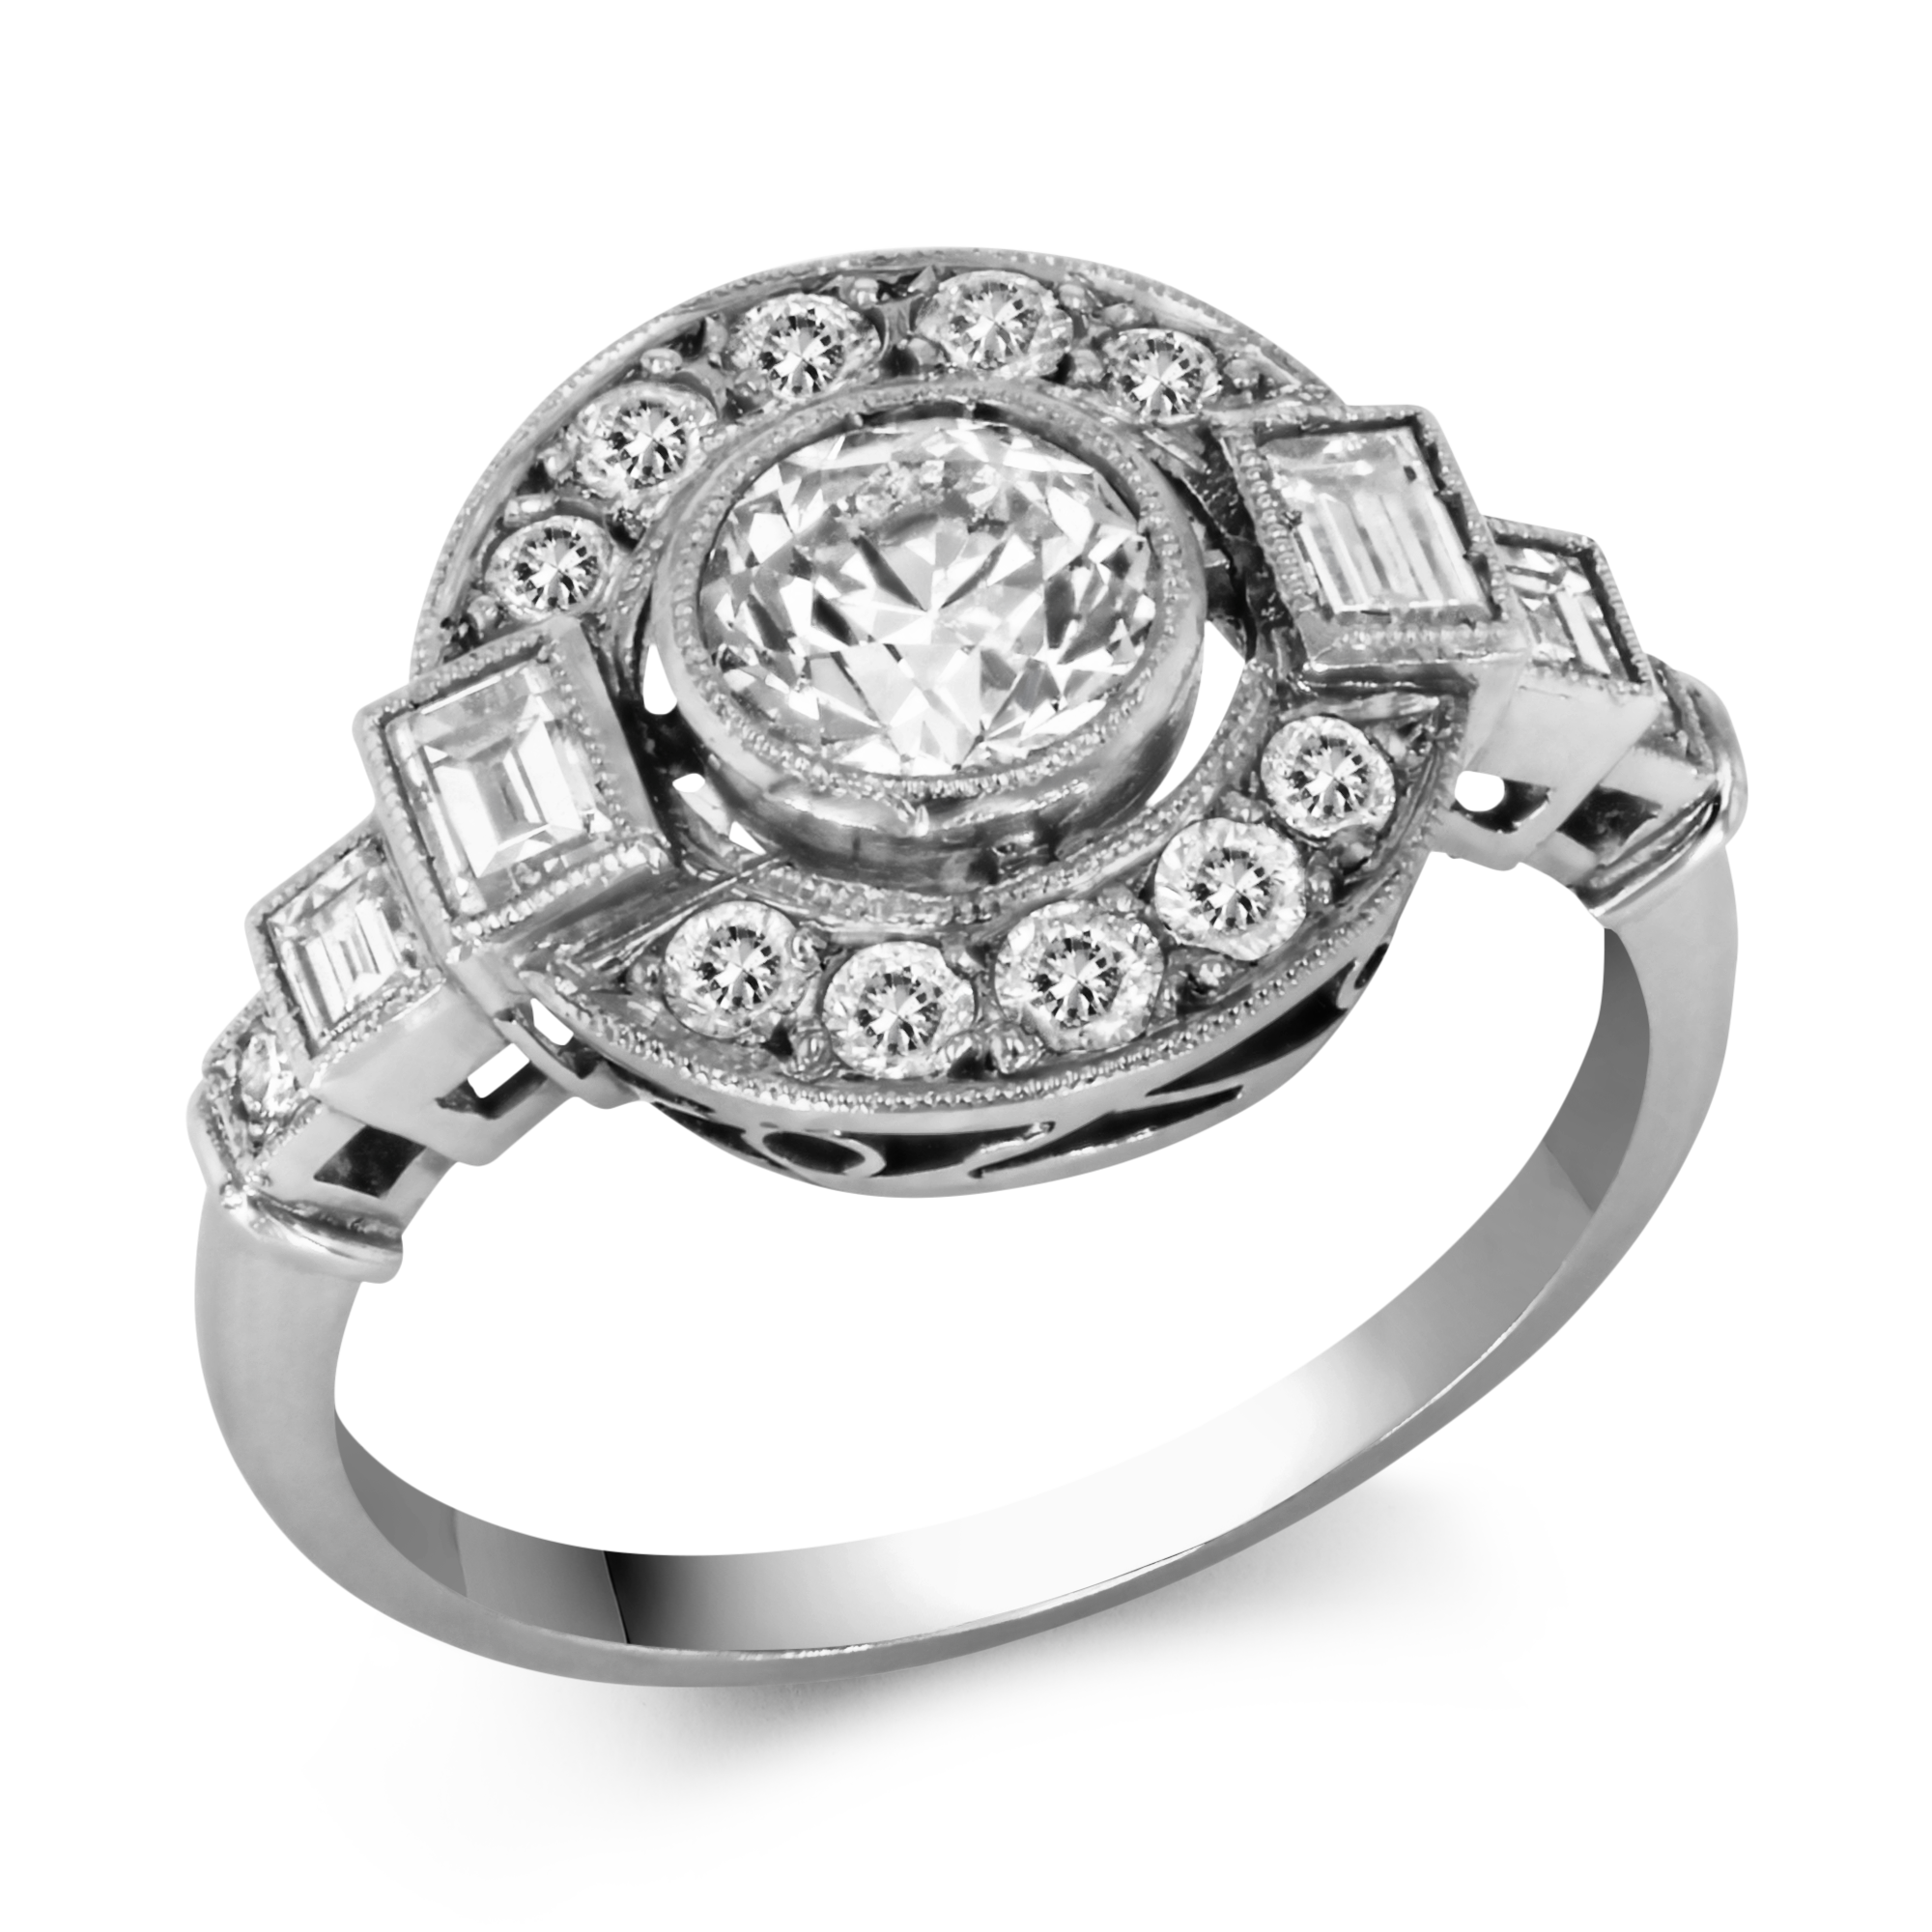 Art Deco Inspired Target Diamond Ring Round & Baguette Cut, Millegrain Set_1